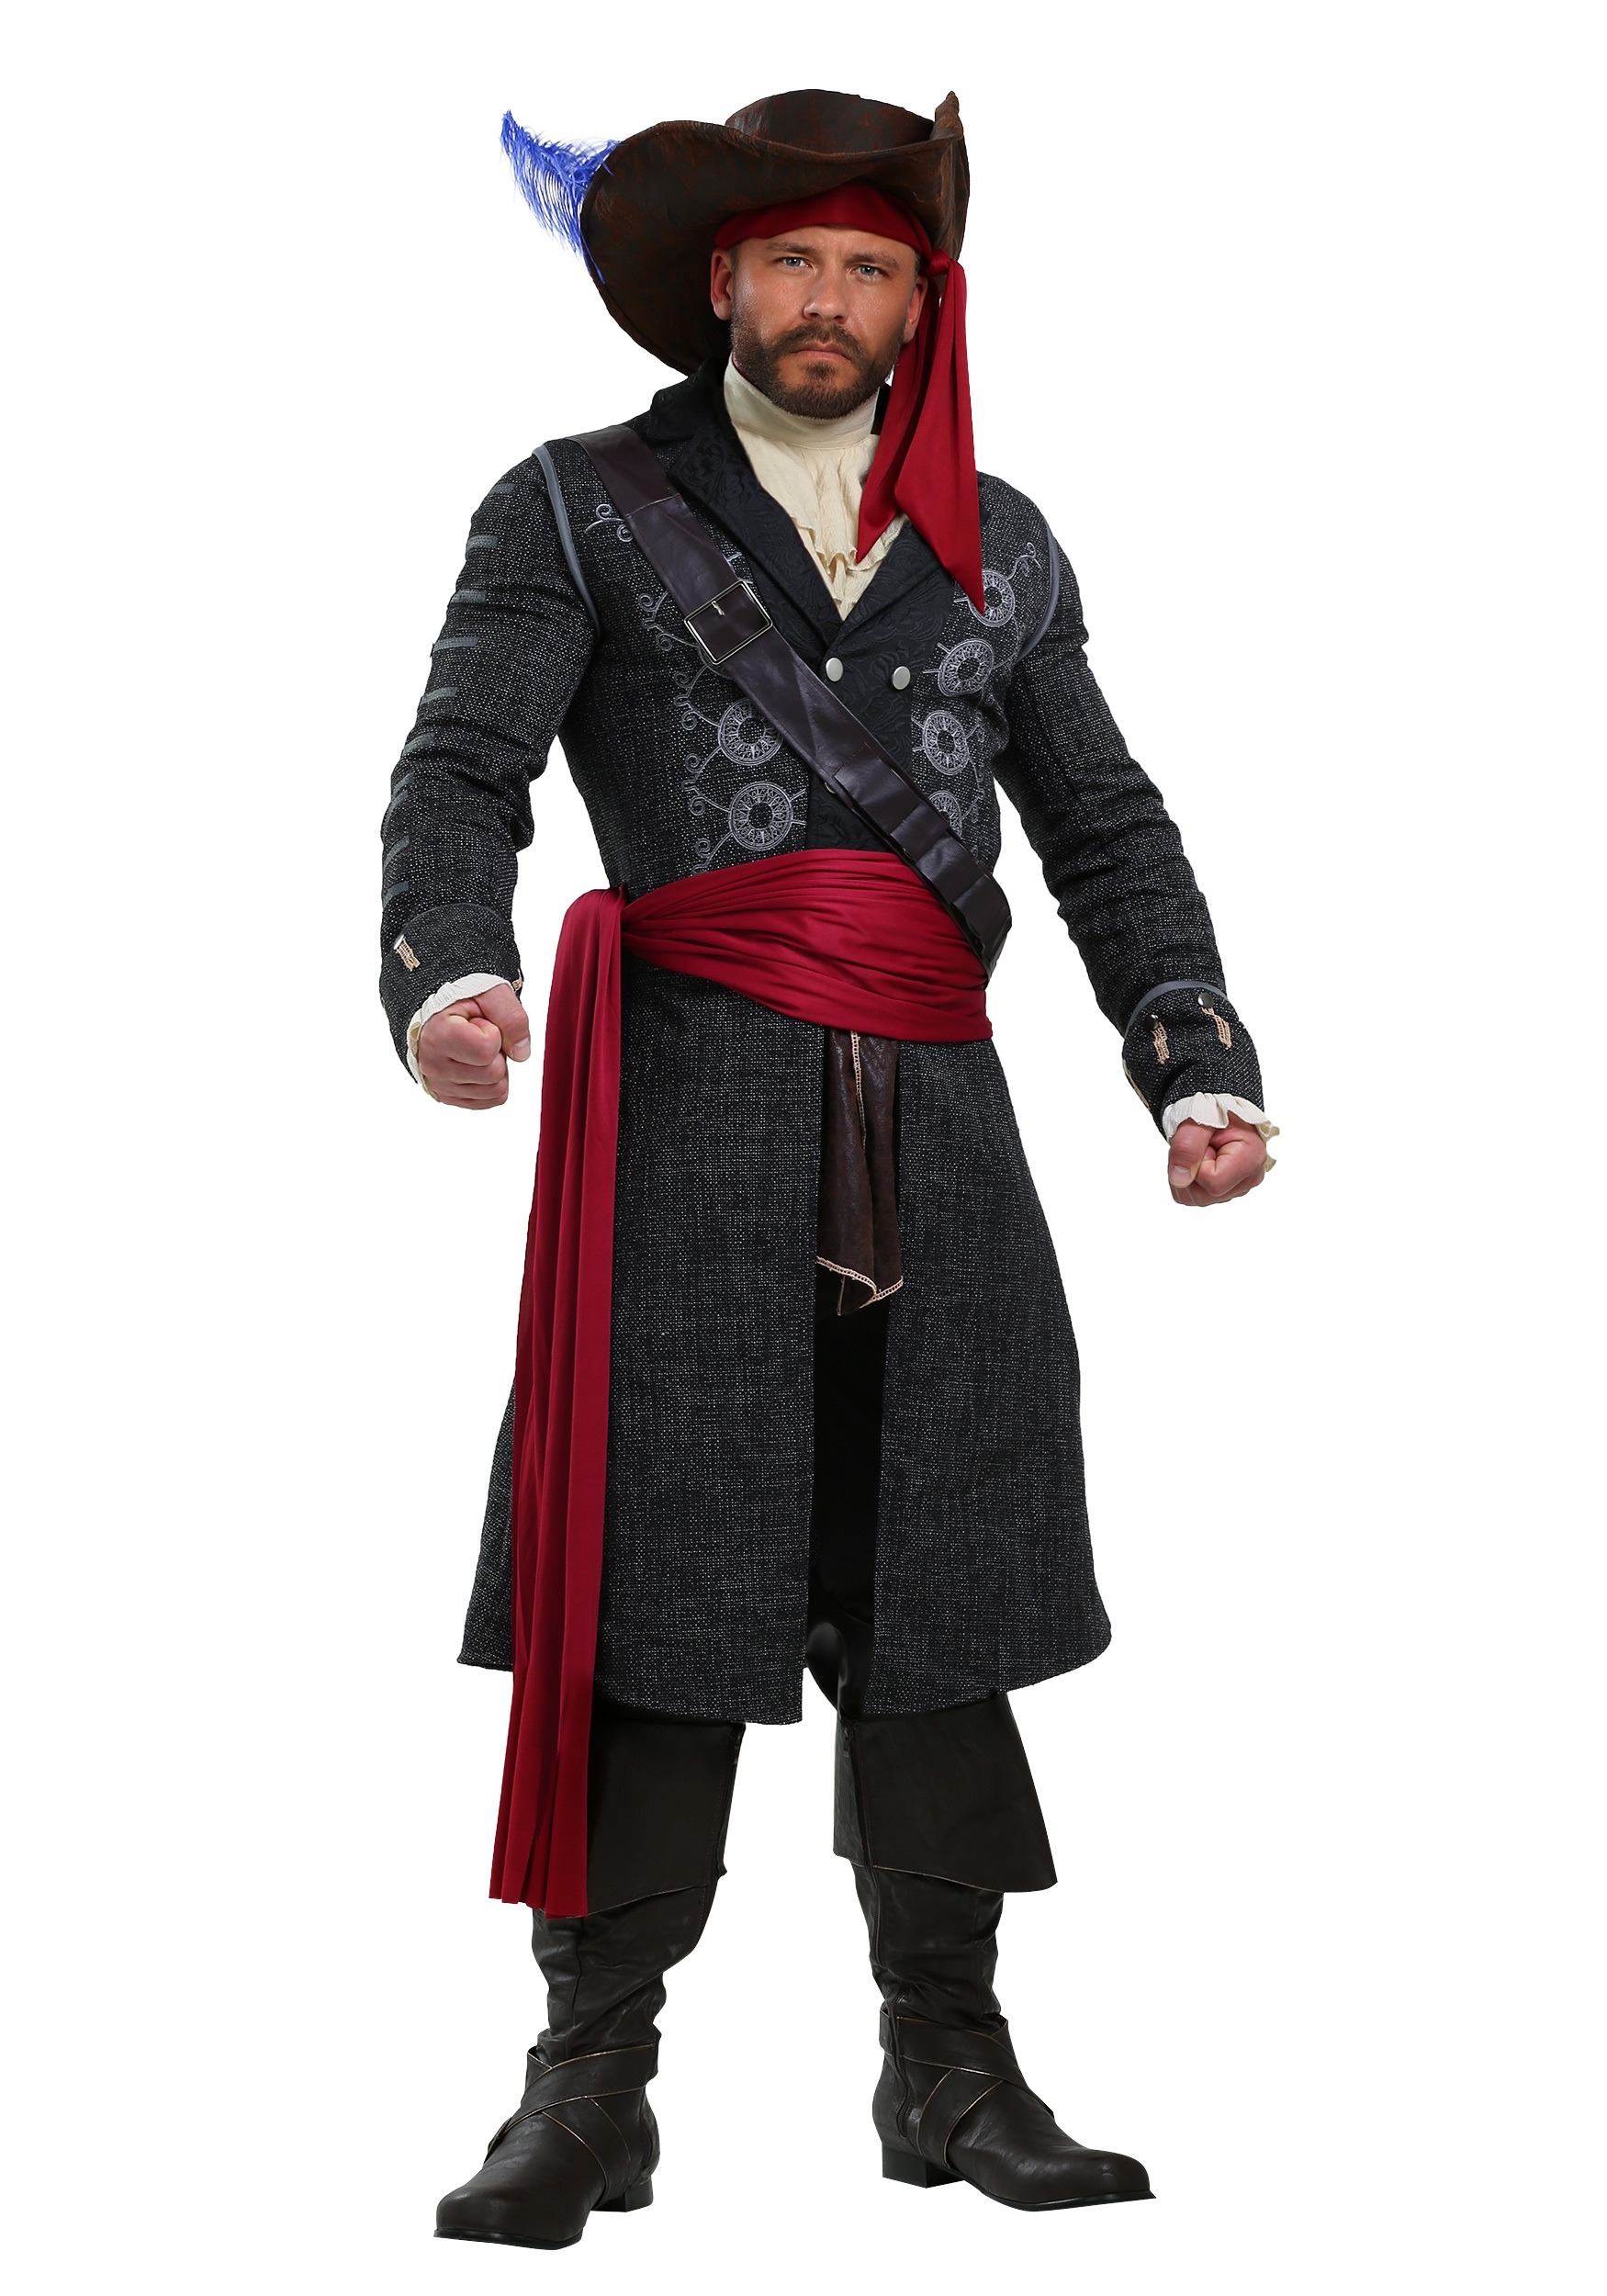 Blackbeard Costume For Adults